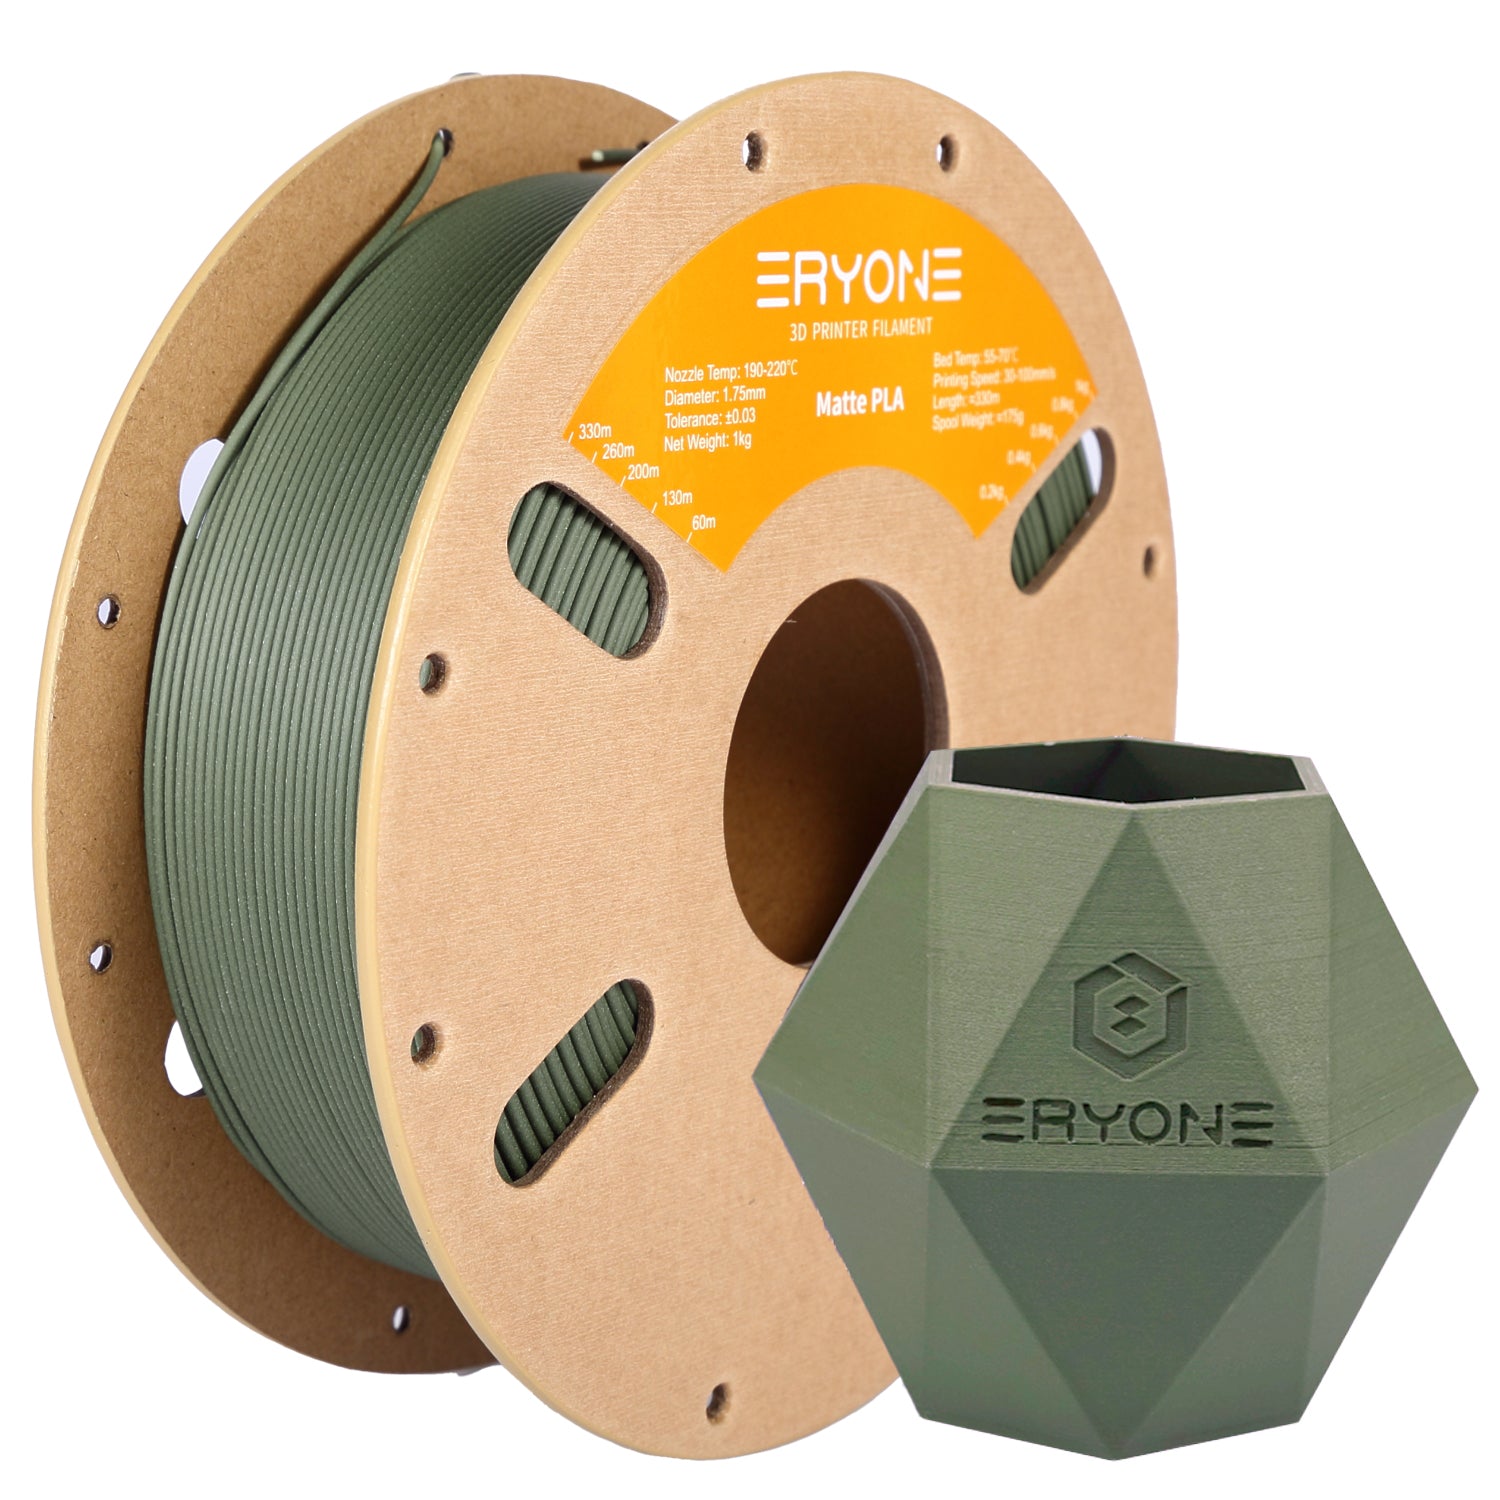 ERYONE Standard Matte /Matte Hyper Speed PLA Filament, 1.75mm Filament for 3D Printer, 1KG(2.2LBS)/ Spool